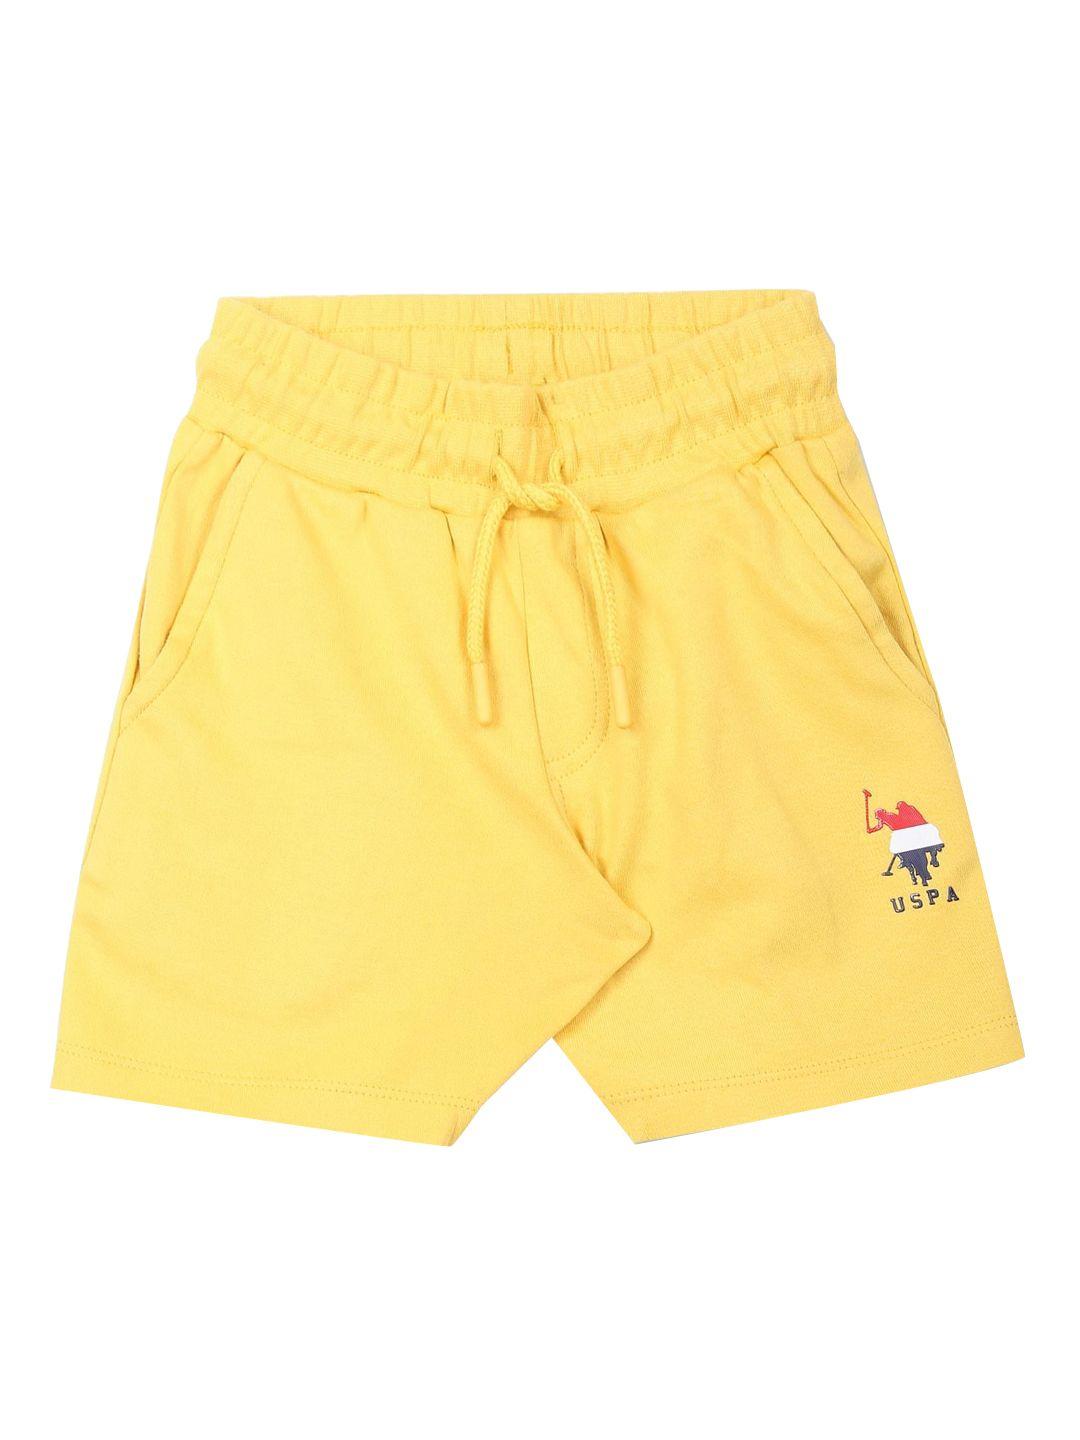 u.s. polo assn. kids boys slim fit pure cotton shorts